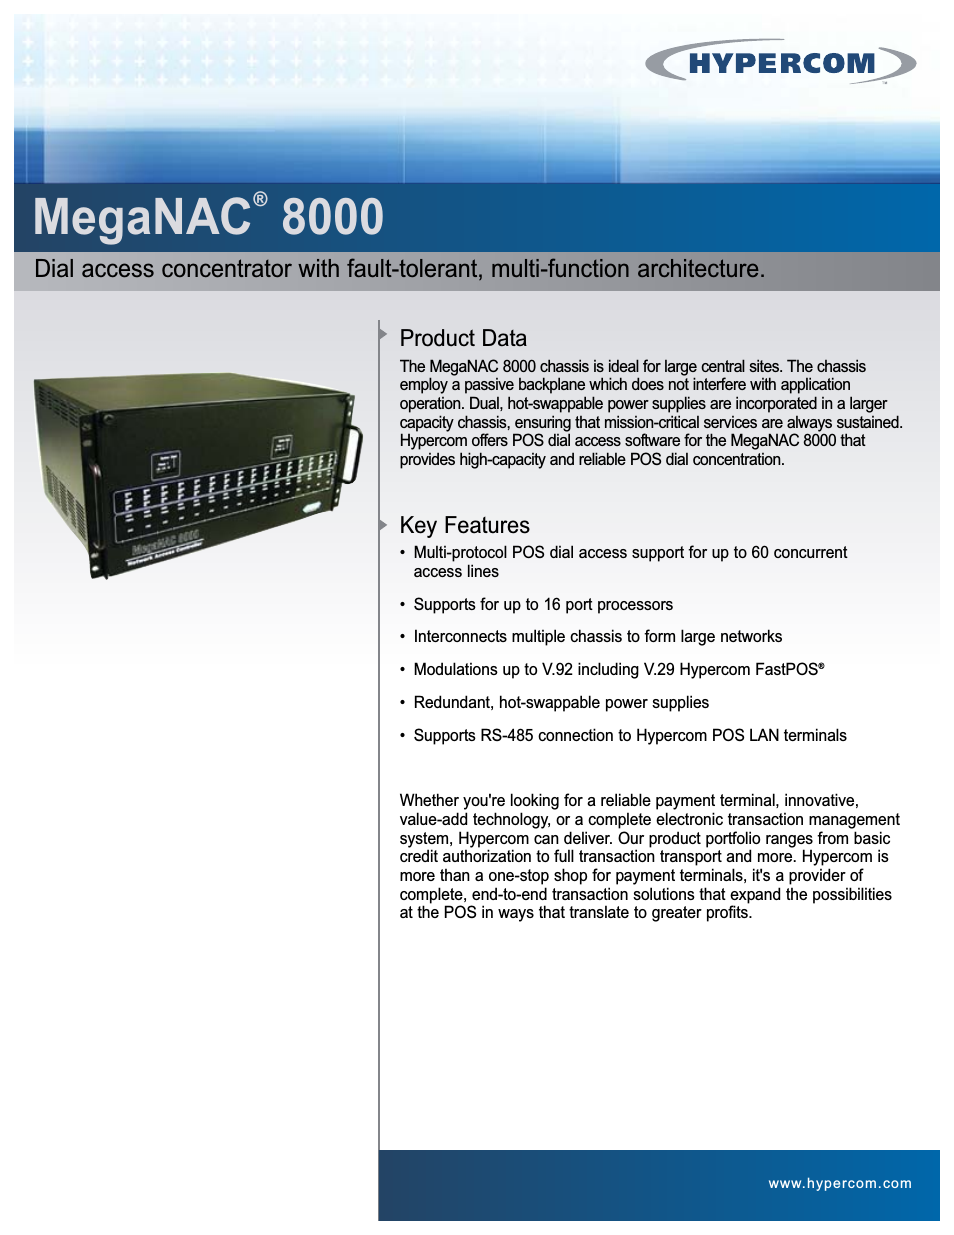 MegaNAC 8000